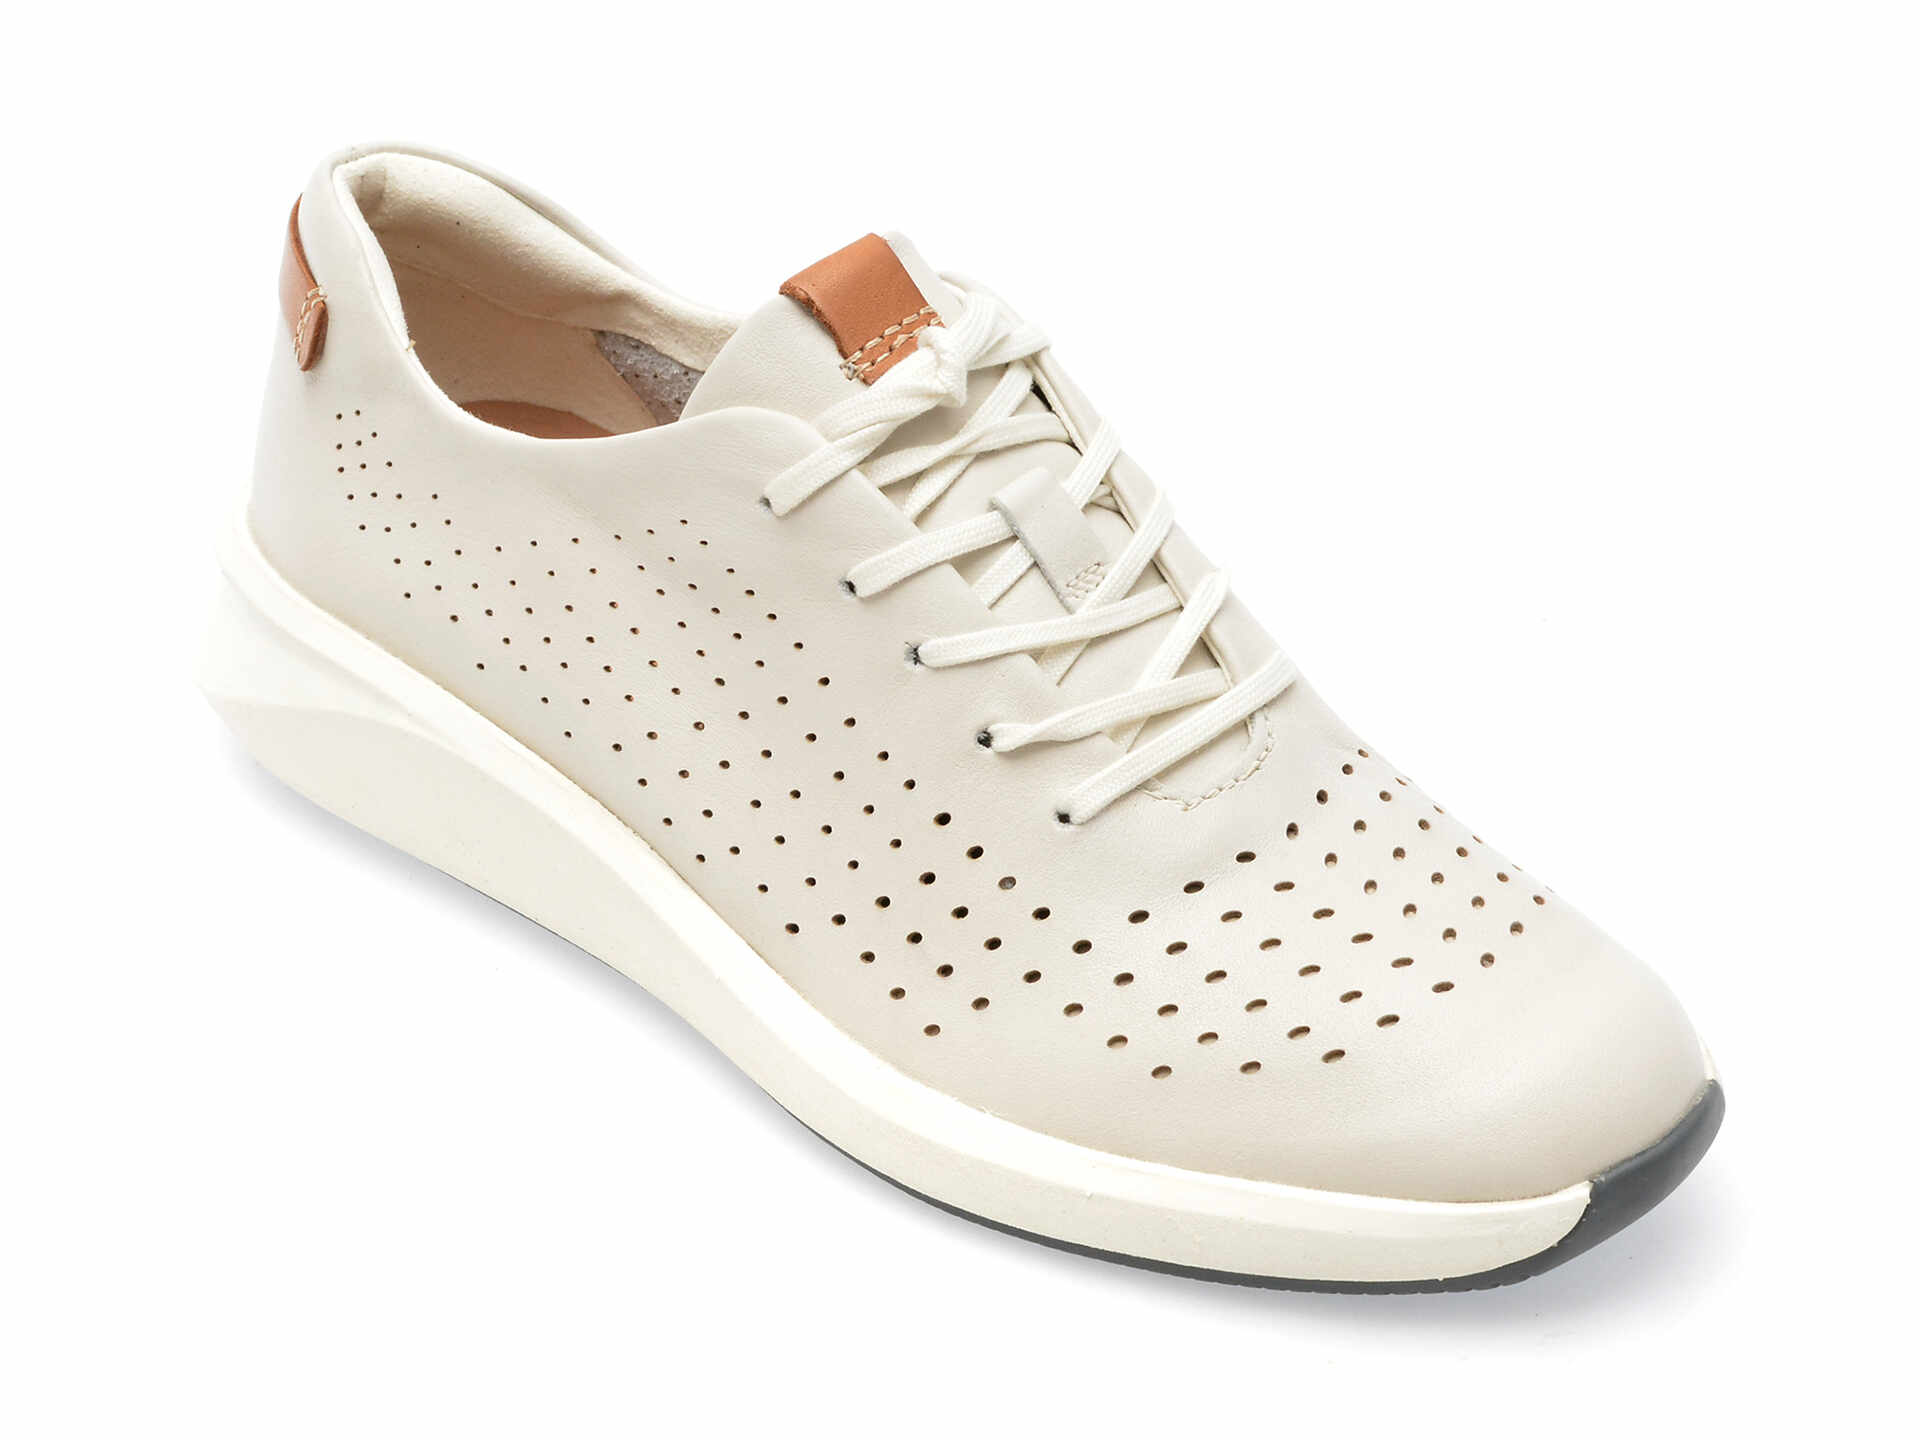 Pantofi CLARKS albi, UN RIO TIE 13-N, din piele naturala